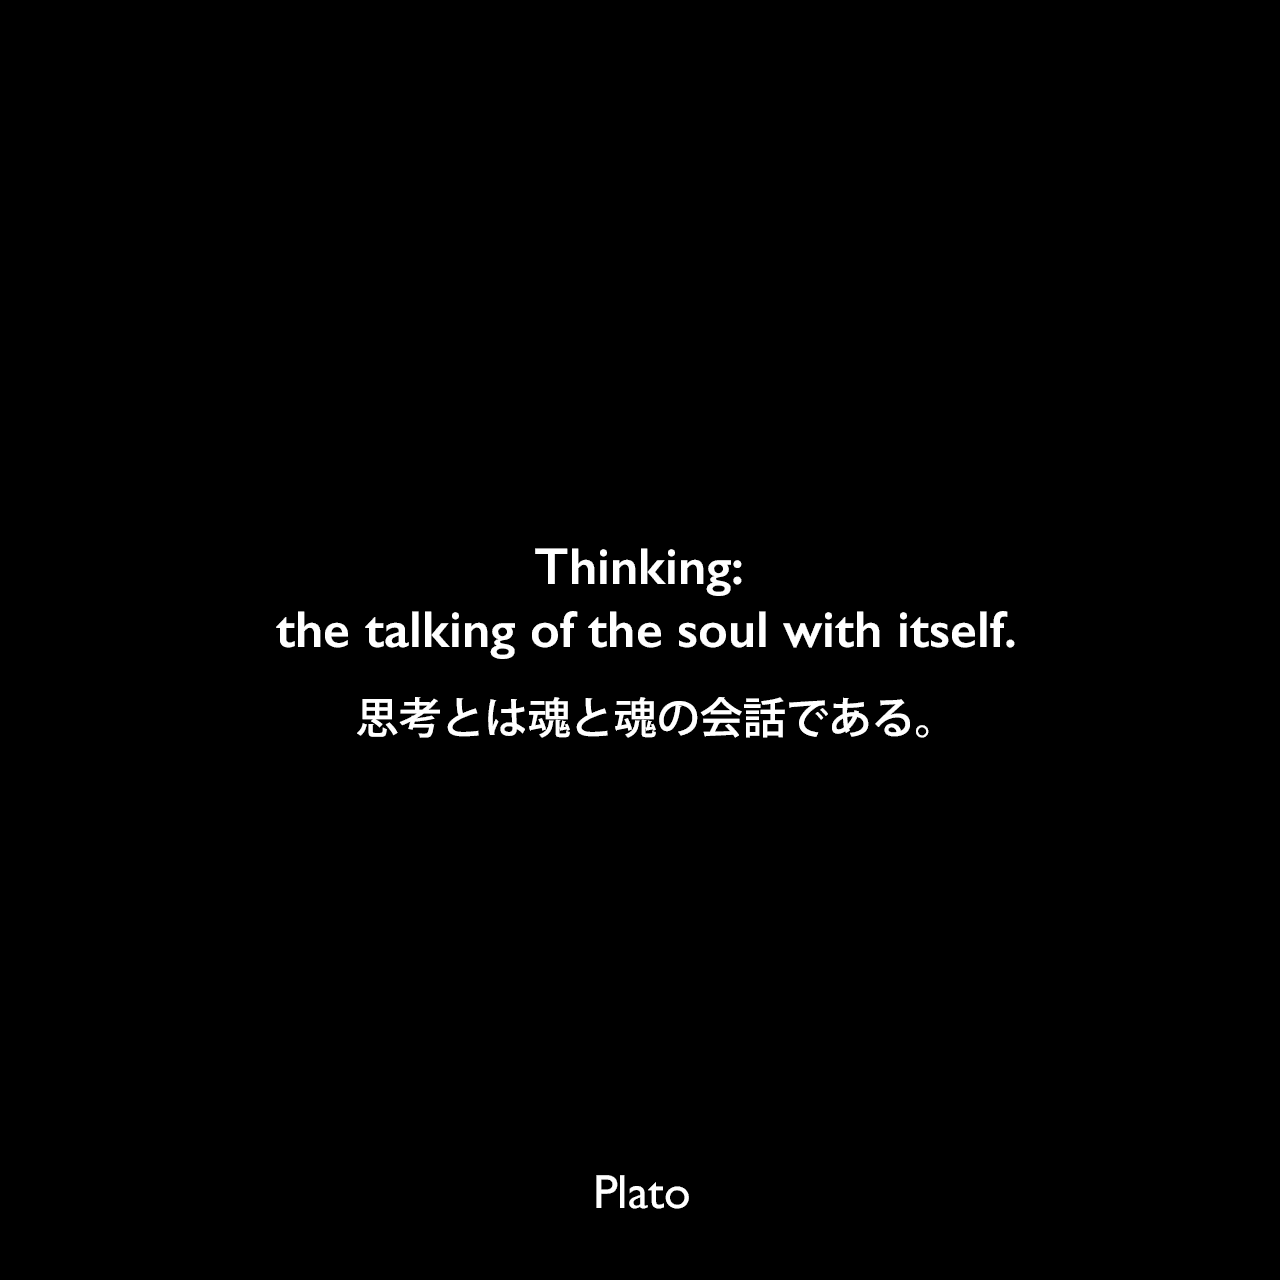 Thinking: the talking of the soul with itself.思考とは魂と魂の会話である。Plato